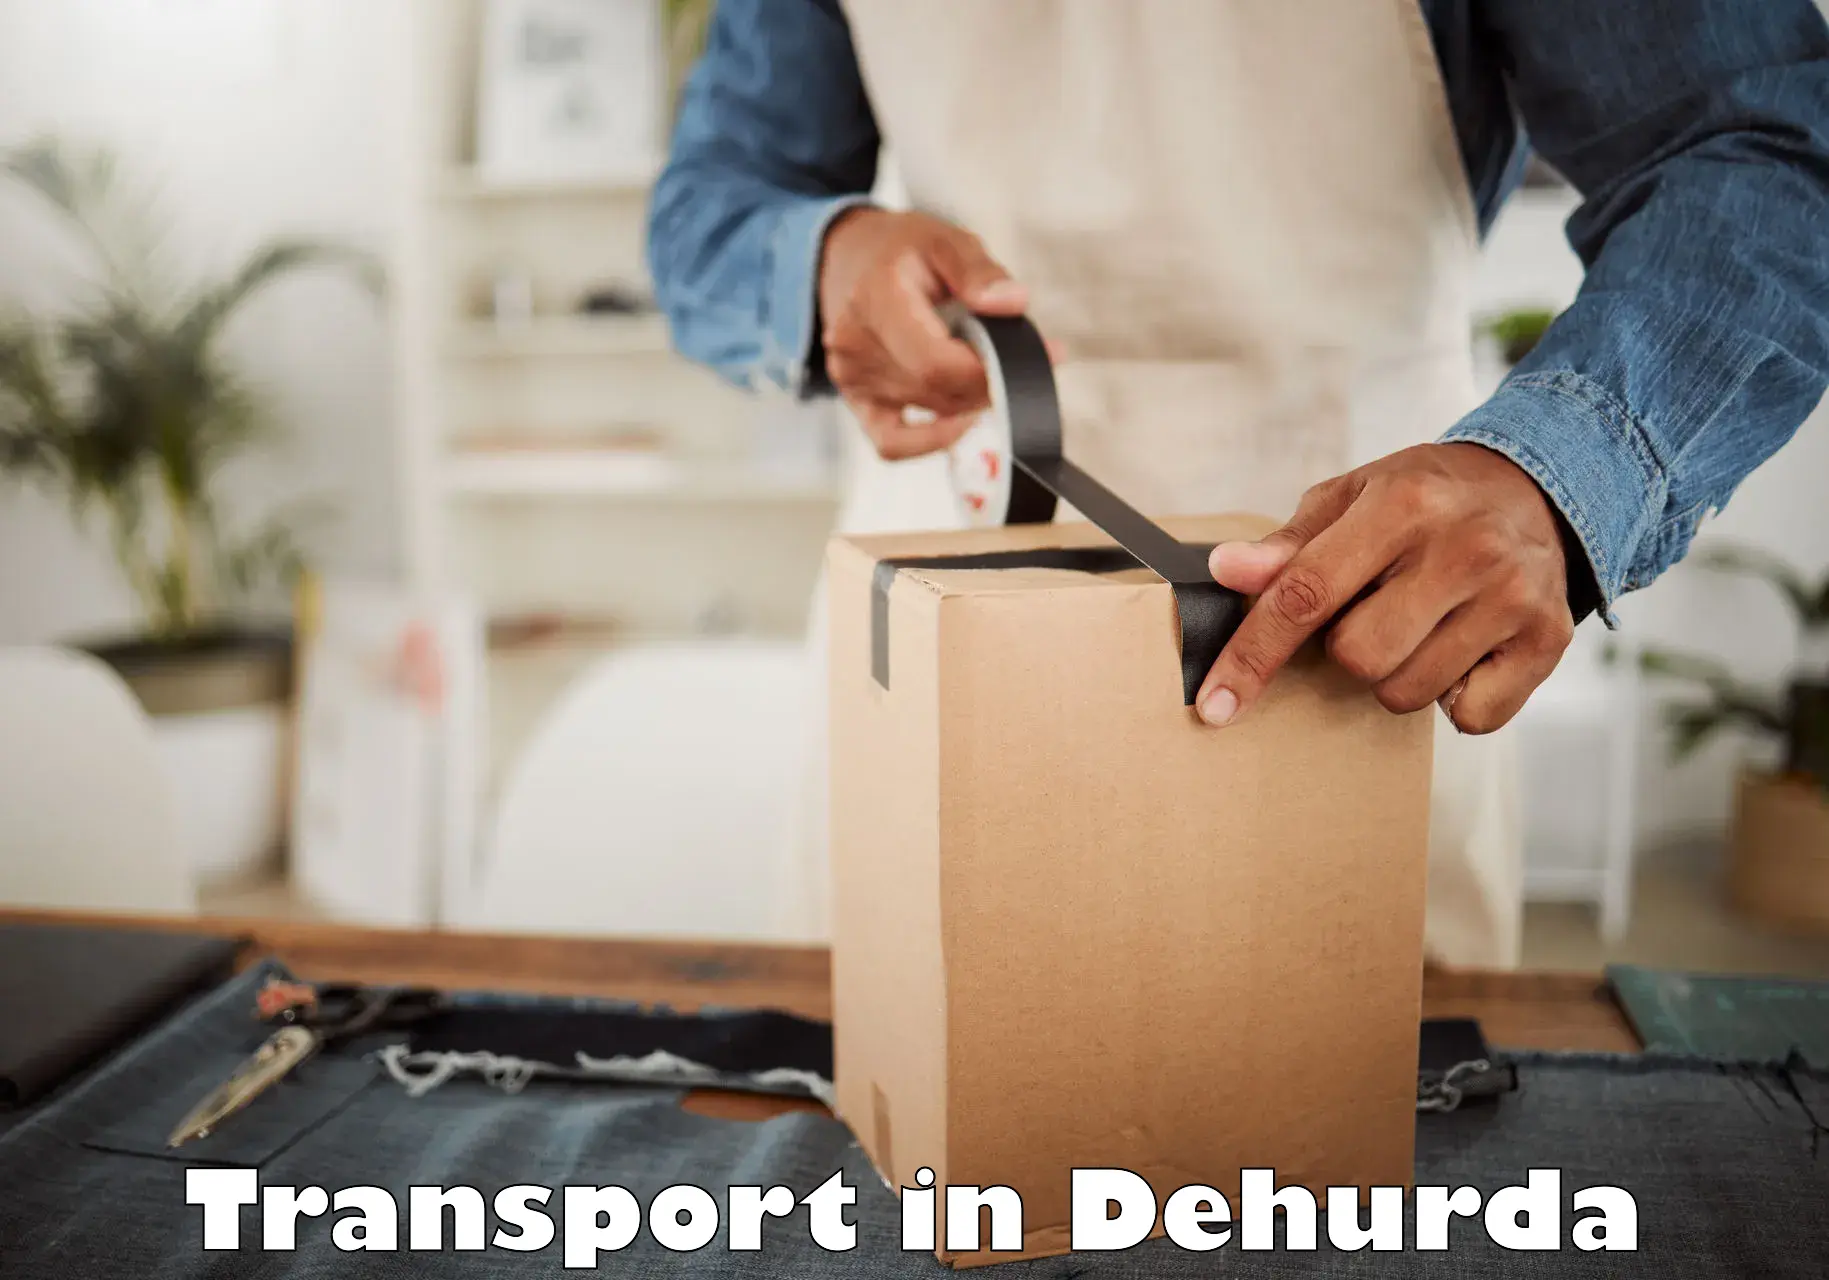 Land transport services in Dehurda